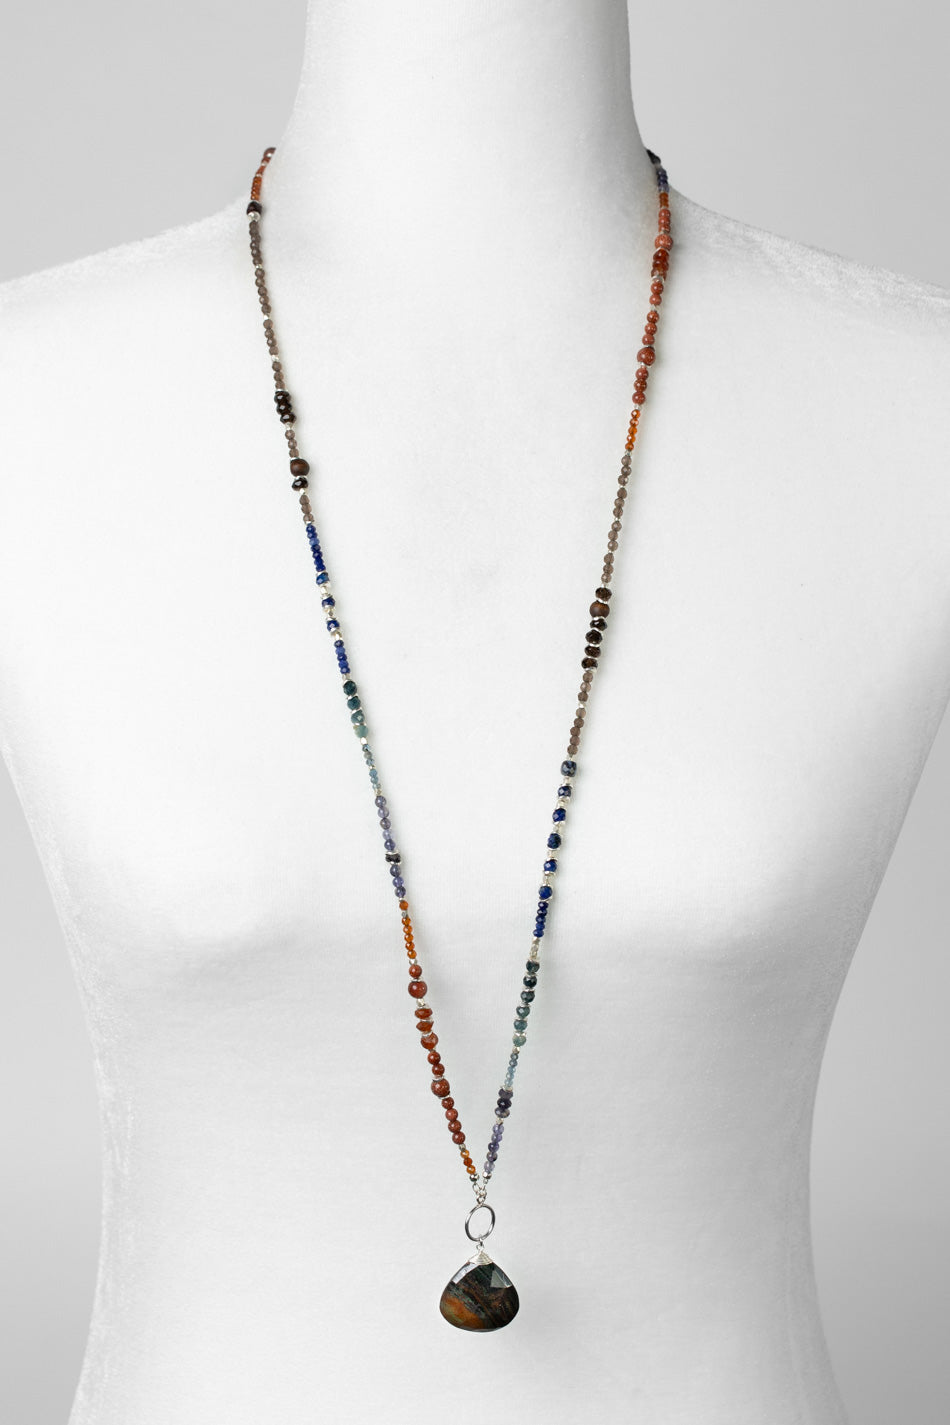 Limited Edition 17.5 or 34" Hessonite Garnet, Lapis Lazuli, Sapphire With Large Pietersite Briolette Statement Necklace